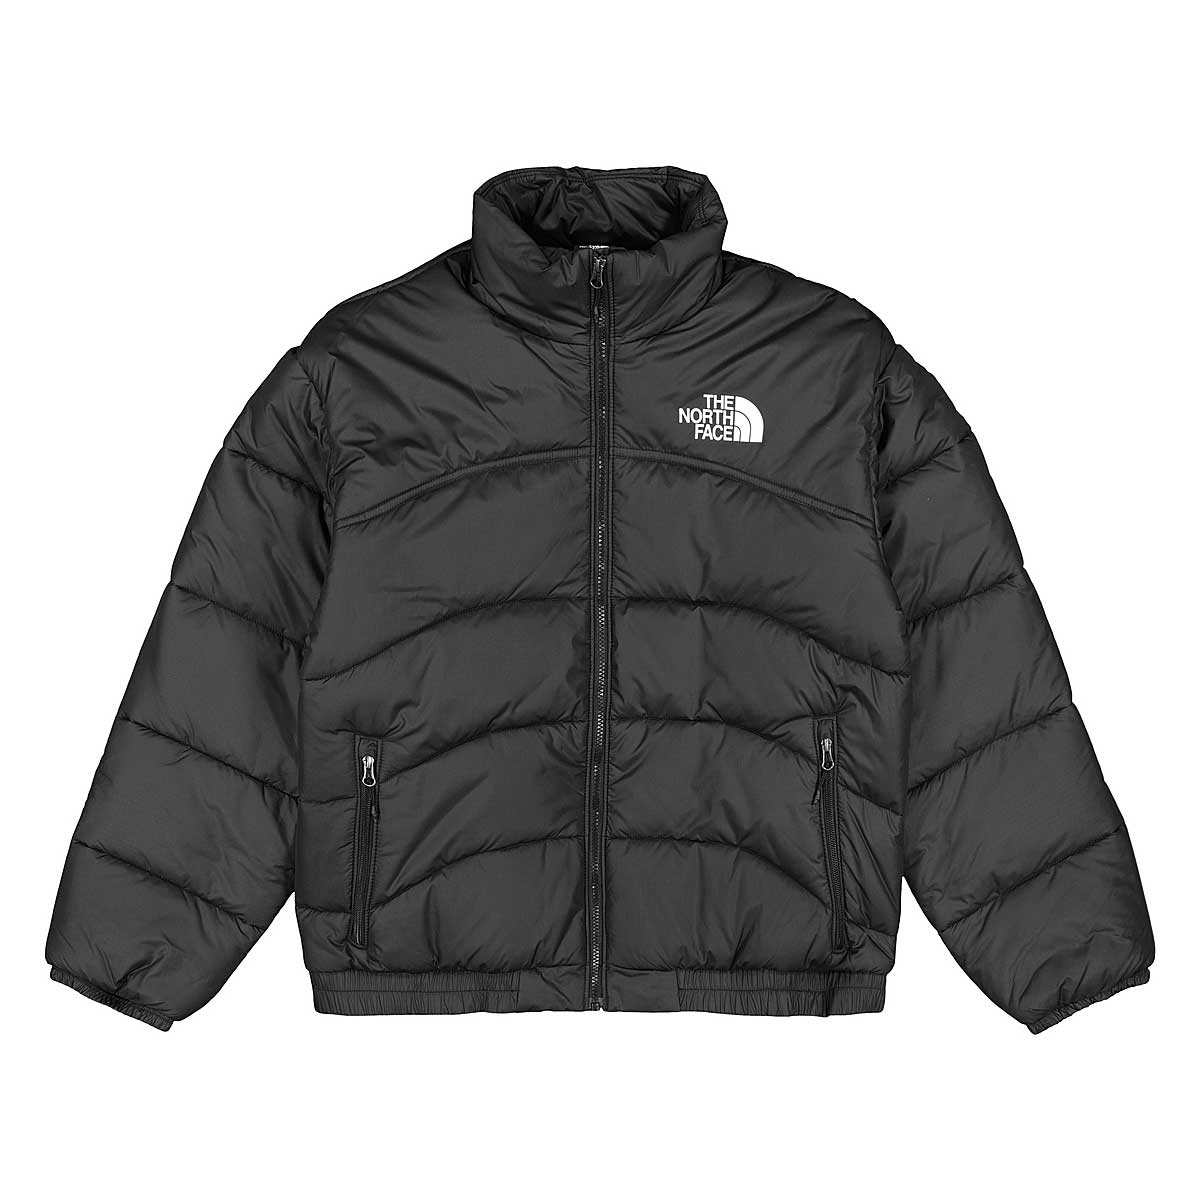 The North Face Jacket 2K, Tnf Black